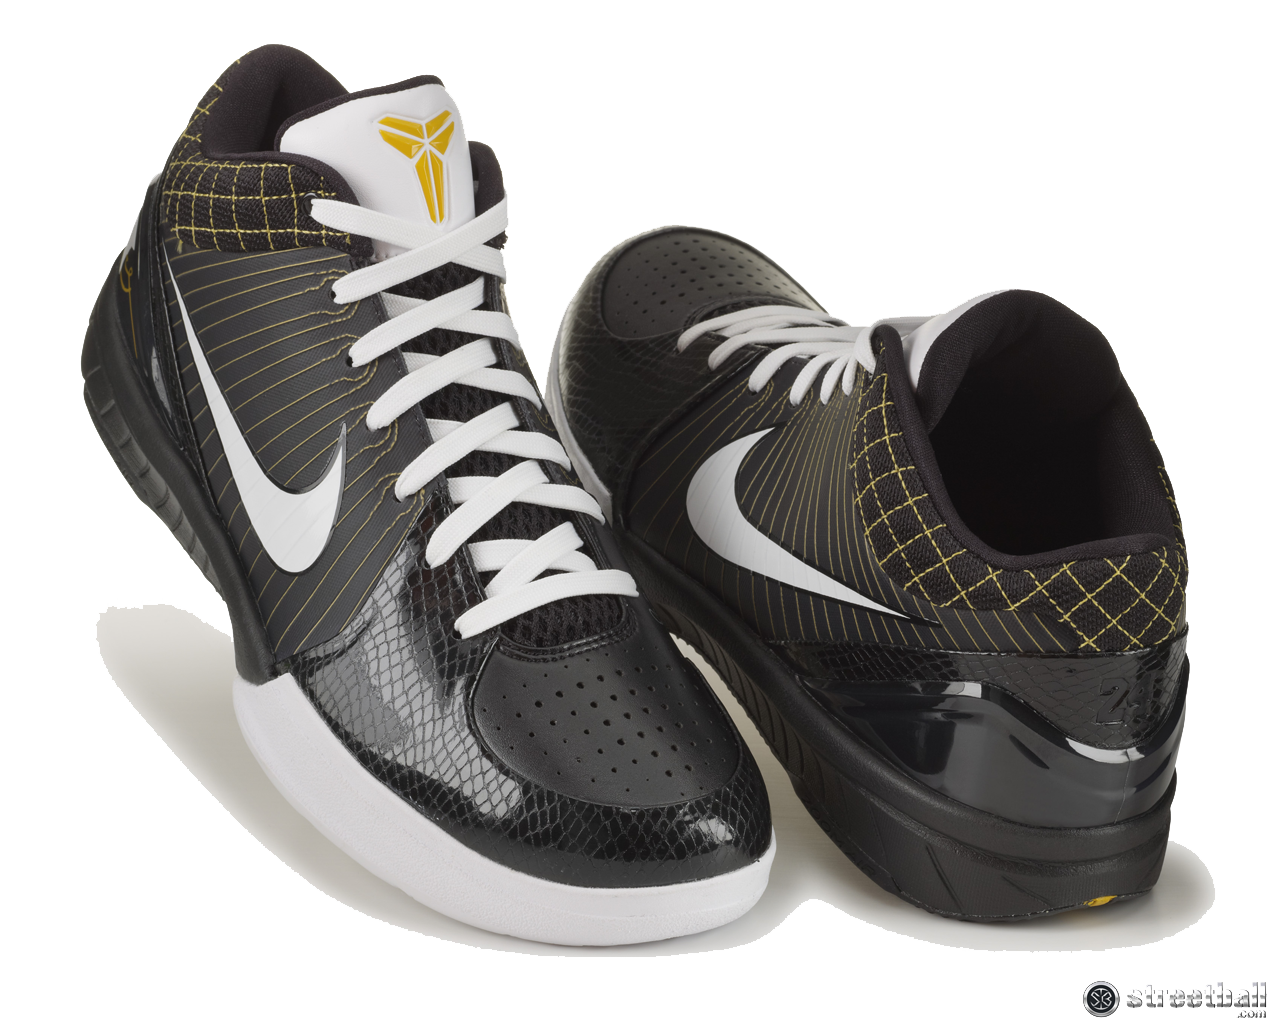 Nike Shoes Png Image - Nike Shoe, Transparent background PNG HD thumbnail